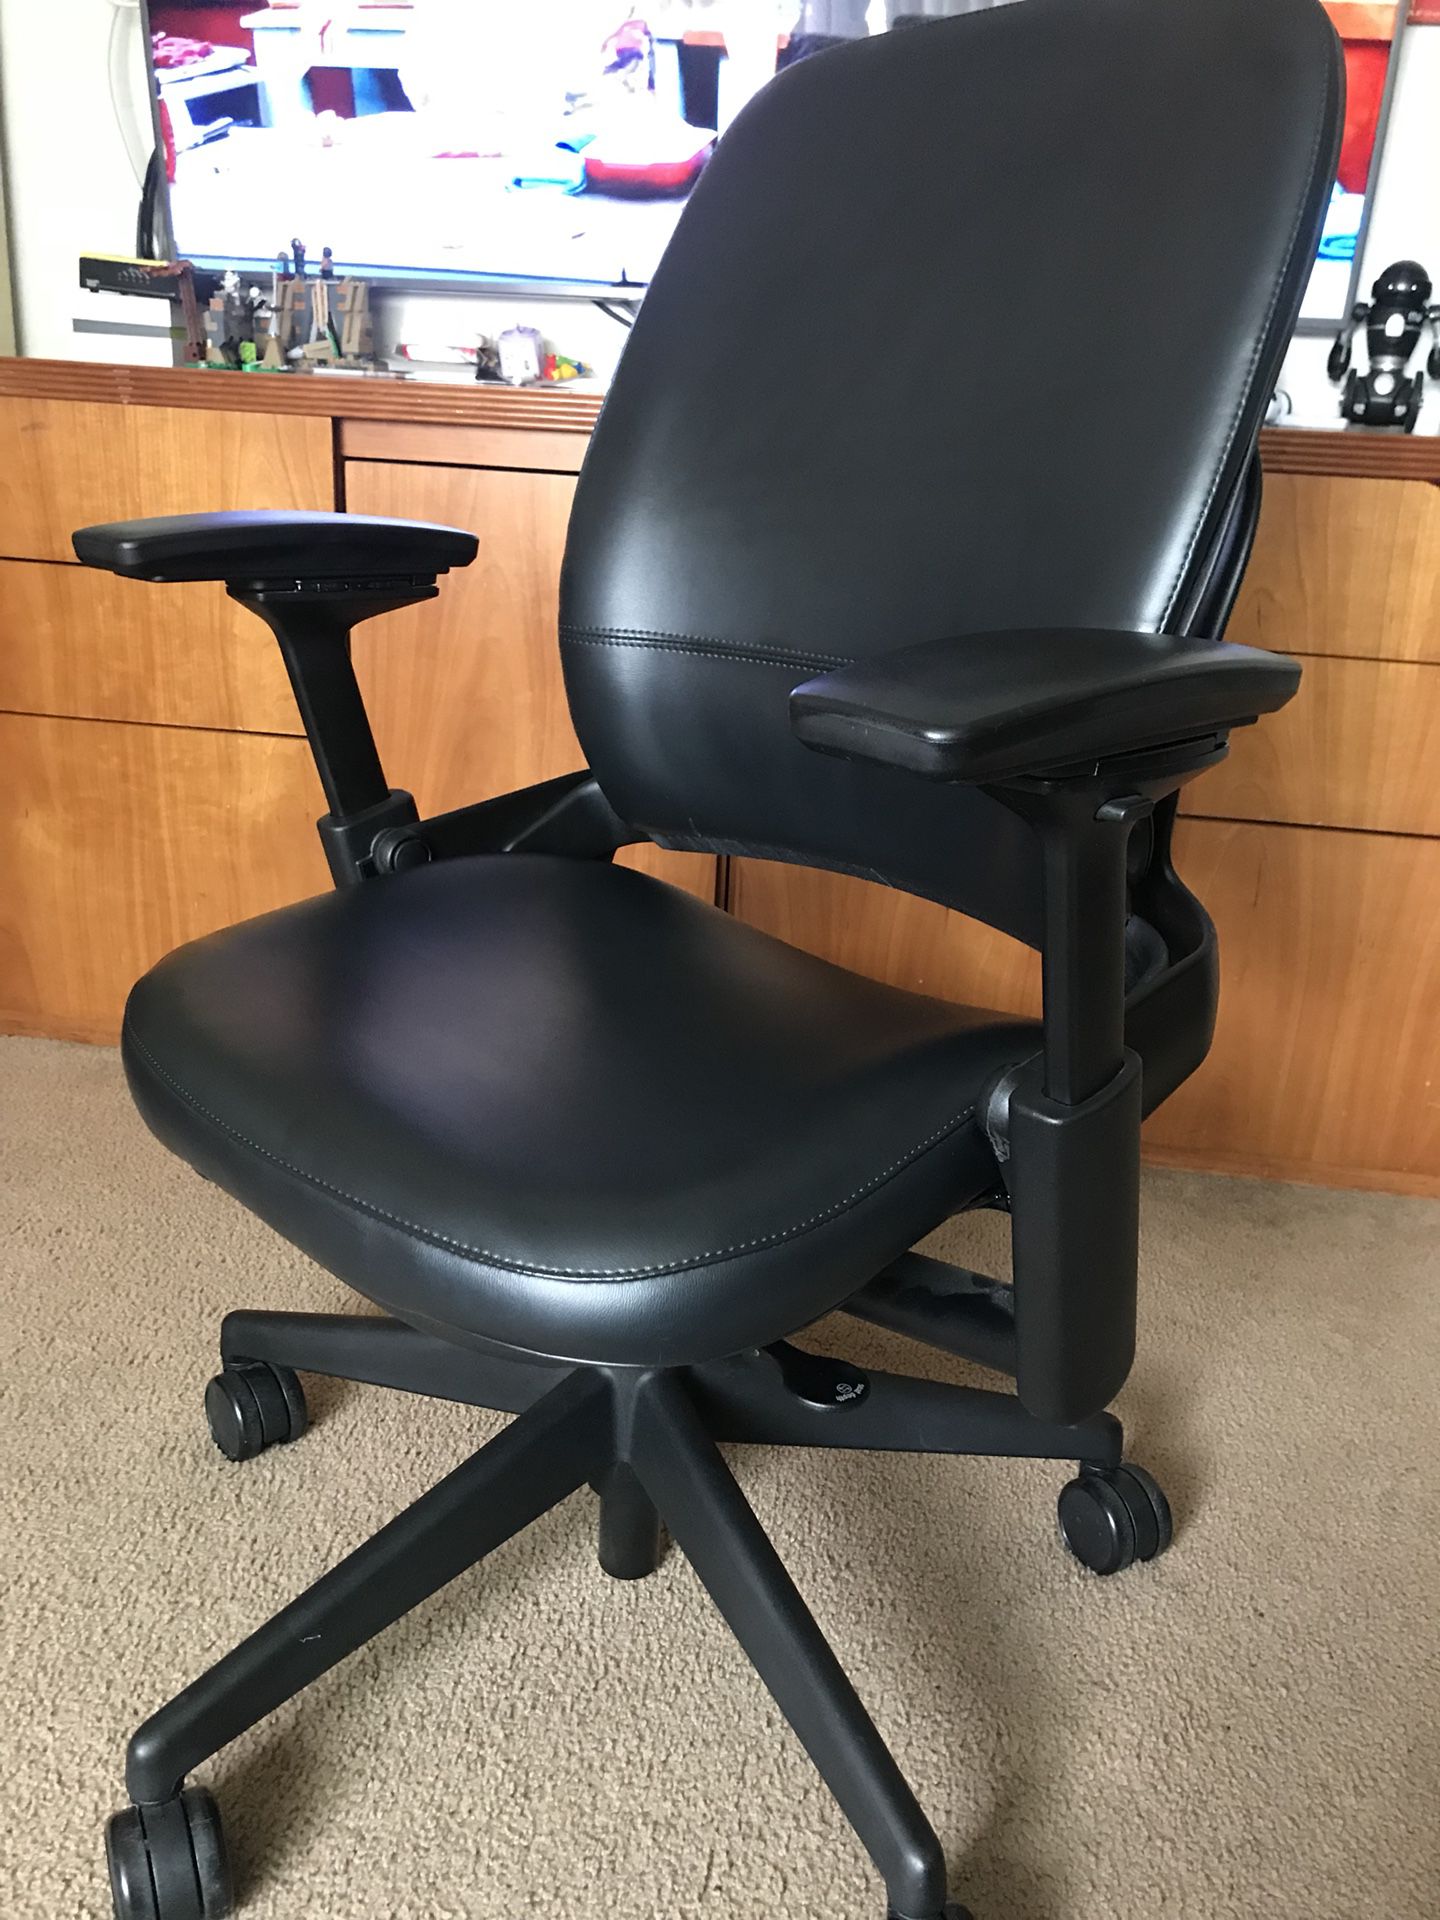 Gorilla Grip Desk Chair Mat for Sale in Woodbridge, VA - OfferUp